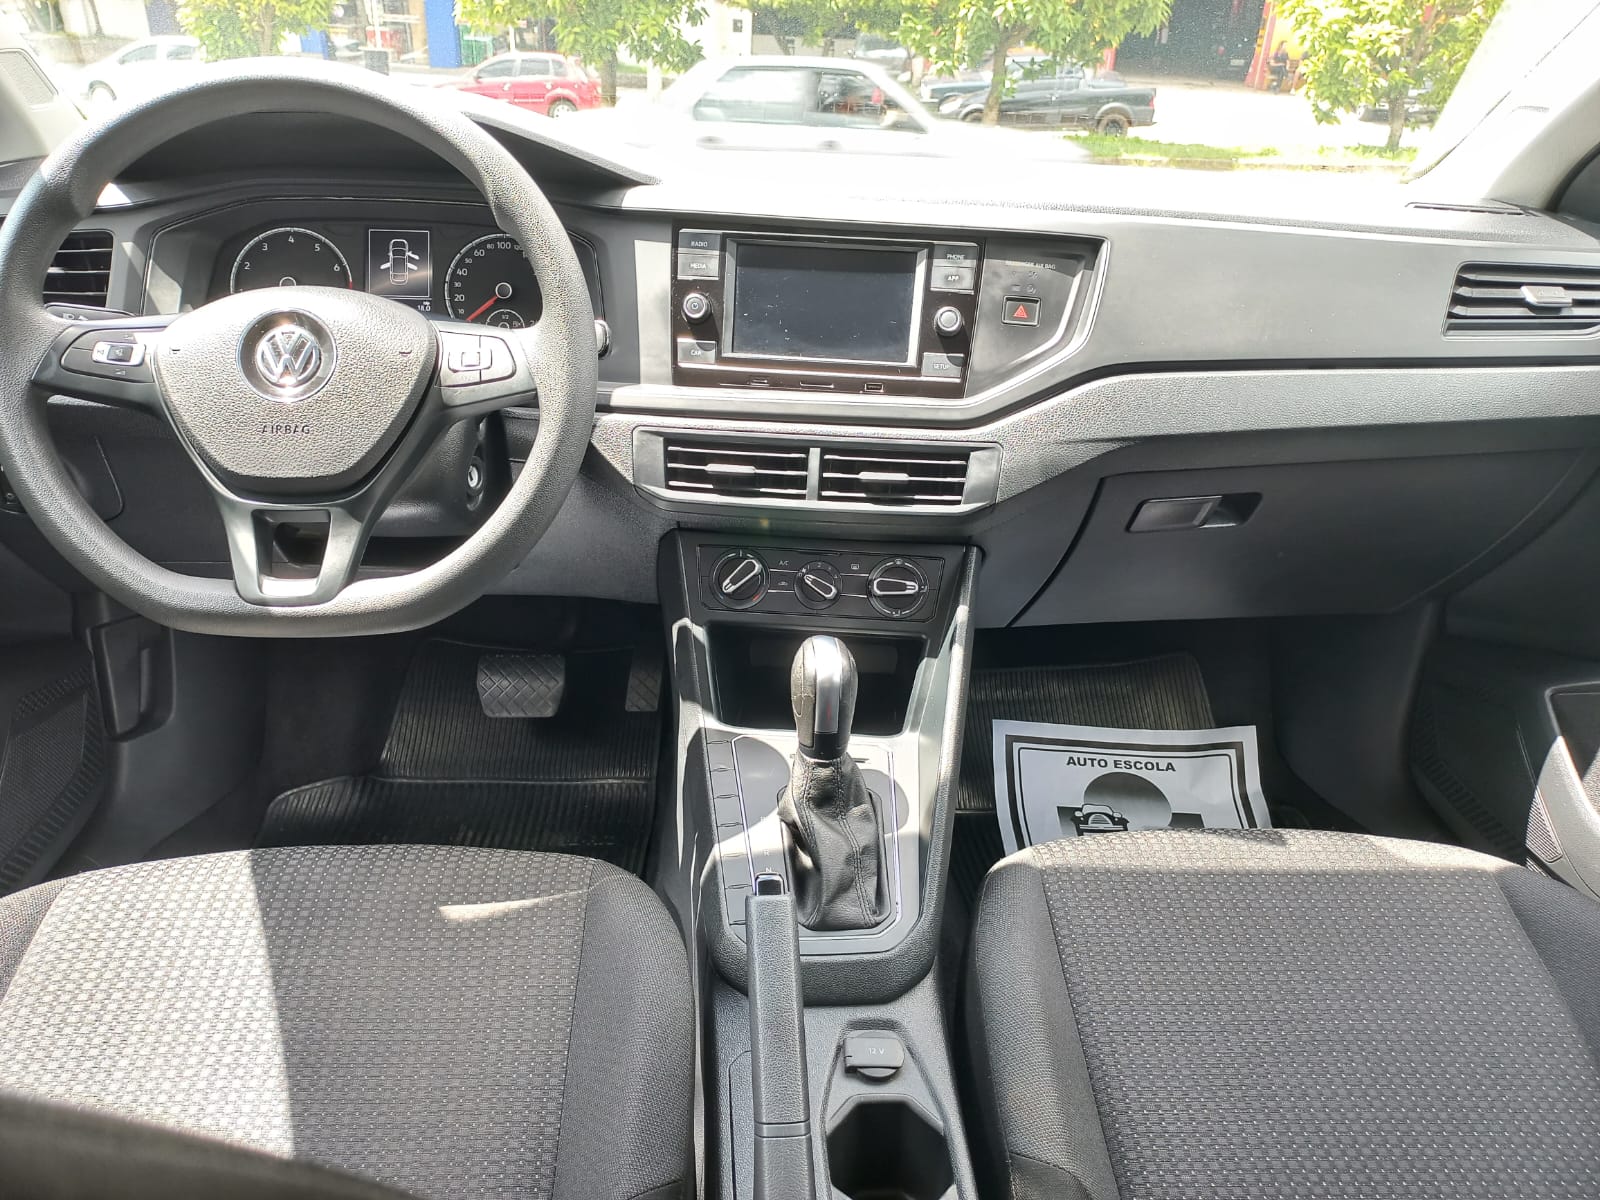 VW - VolksWagen VIRTUS 1.6 MSI Flex 16V 4p Aut.